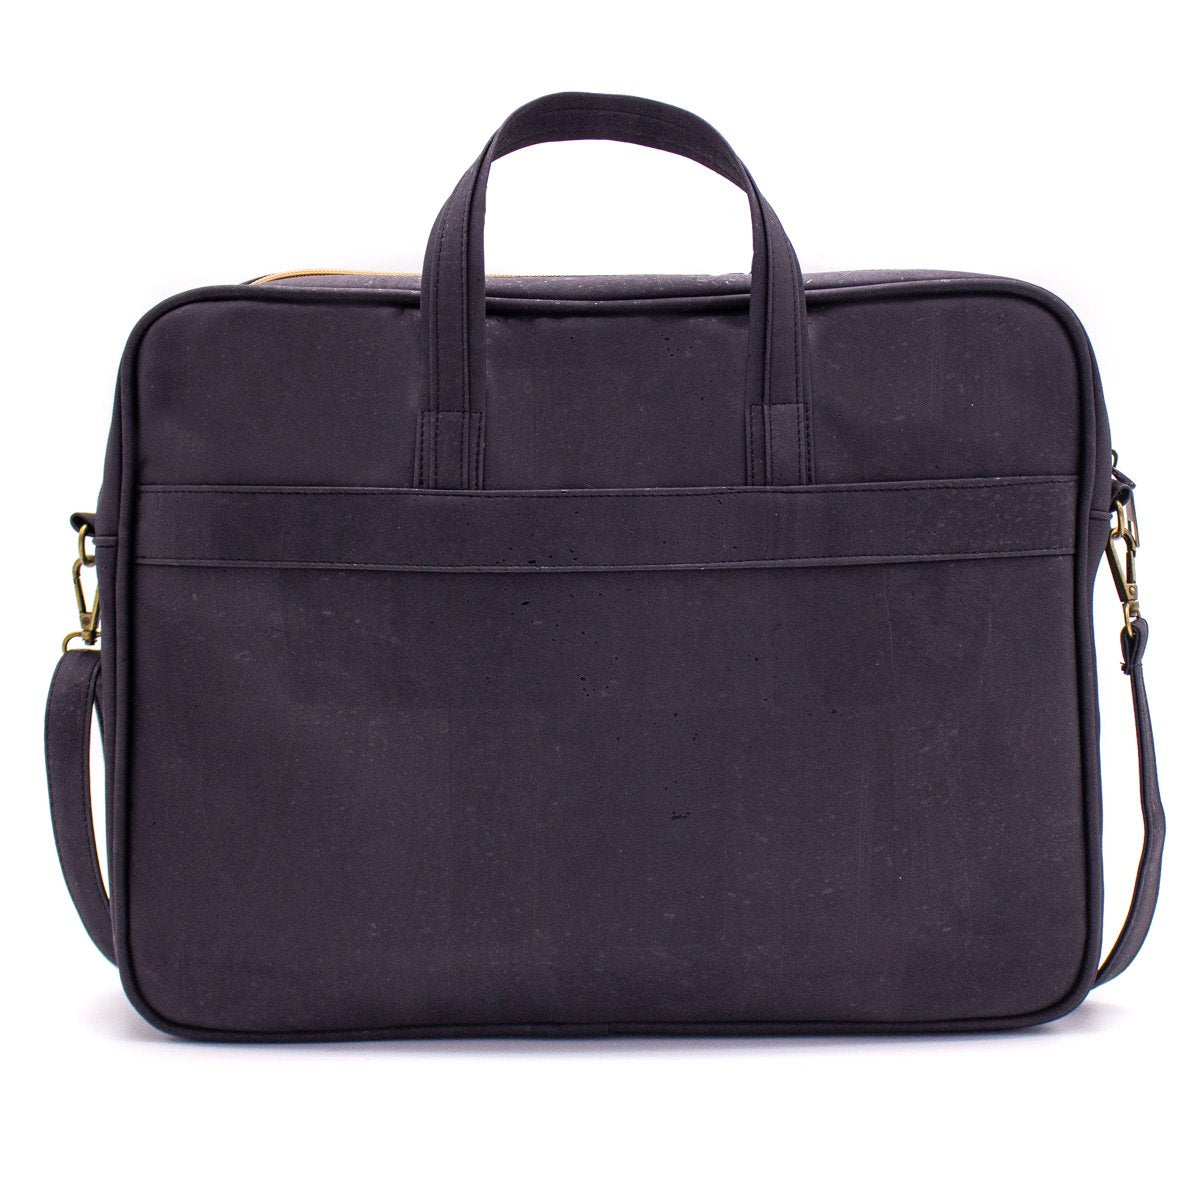 17 inch Laptop Briefcase Cork Shoulder Bag w/ Organizer - Water Resistant Business Messenger Briefcases | THE CORK COLLECTION